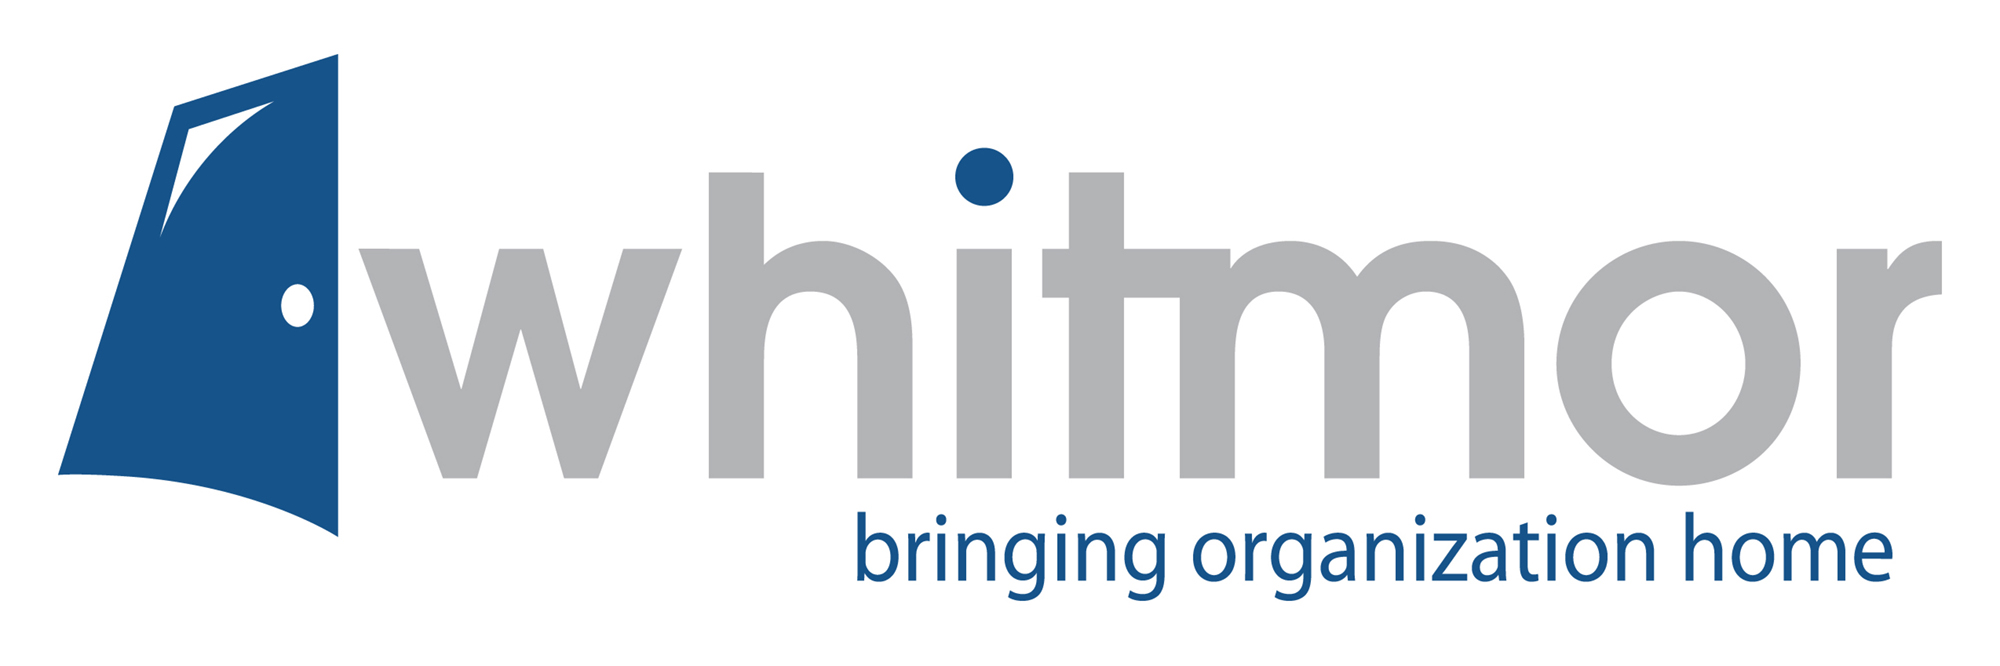 Whitmor logo